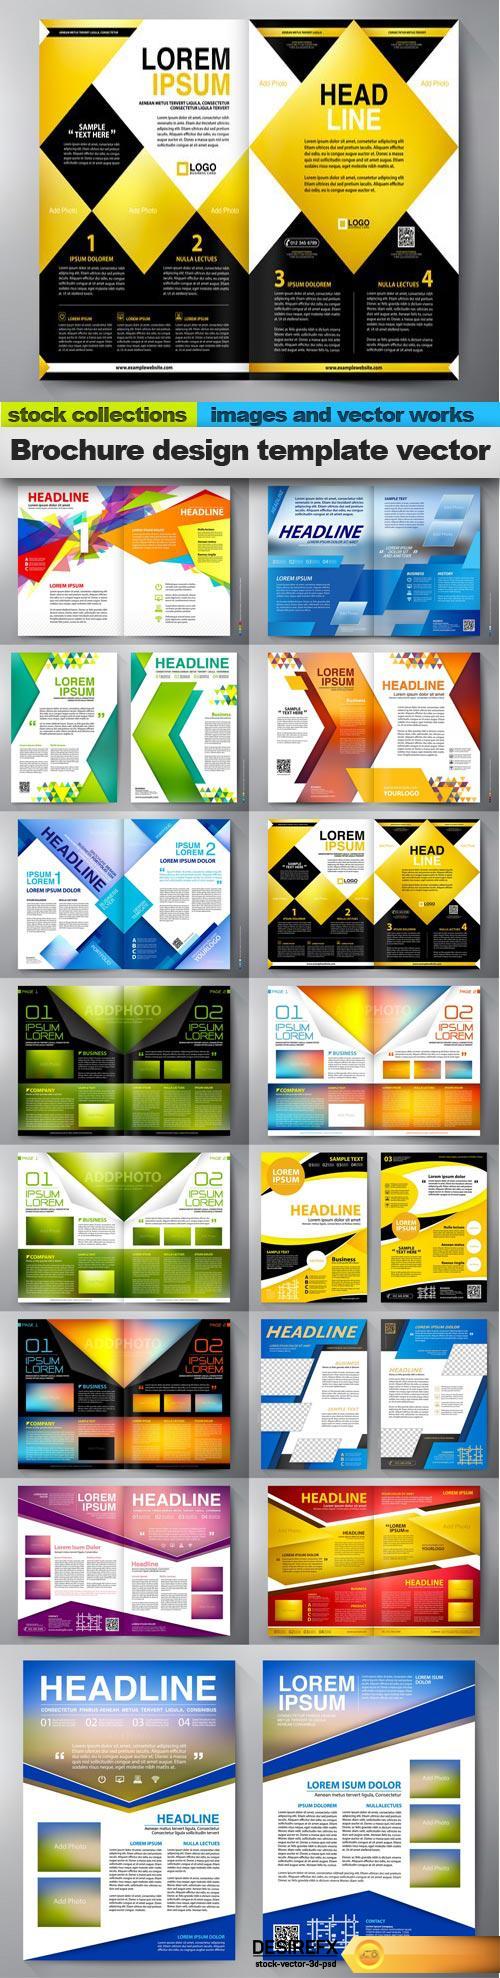 Brochure design template vector, 15 x EPS